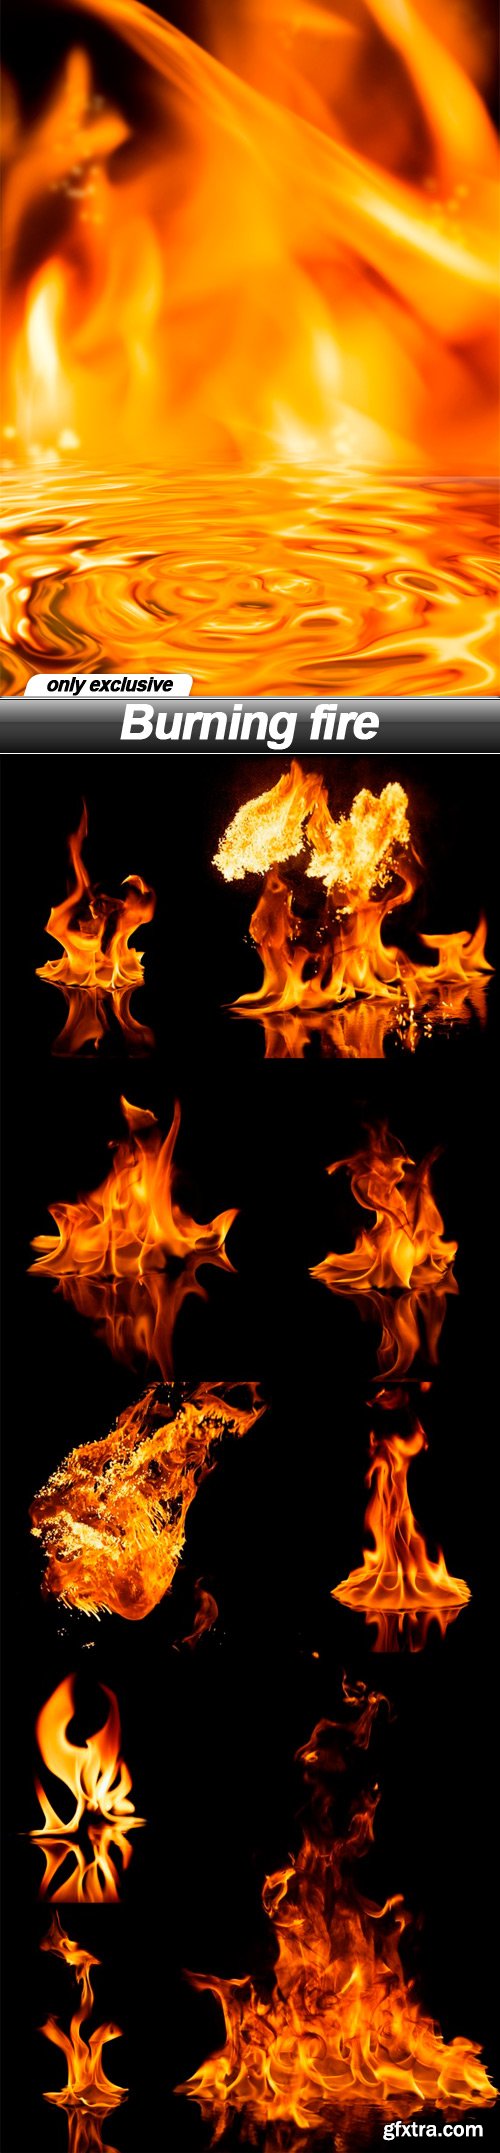 Burning fire - 10 UHQ JPEG